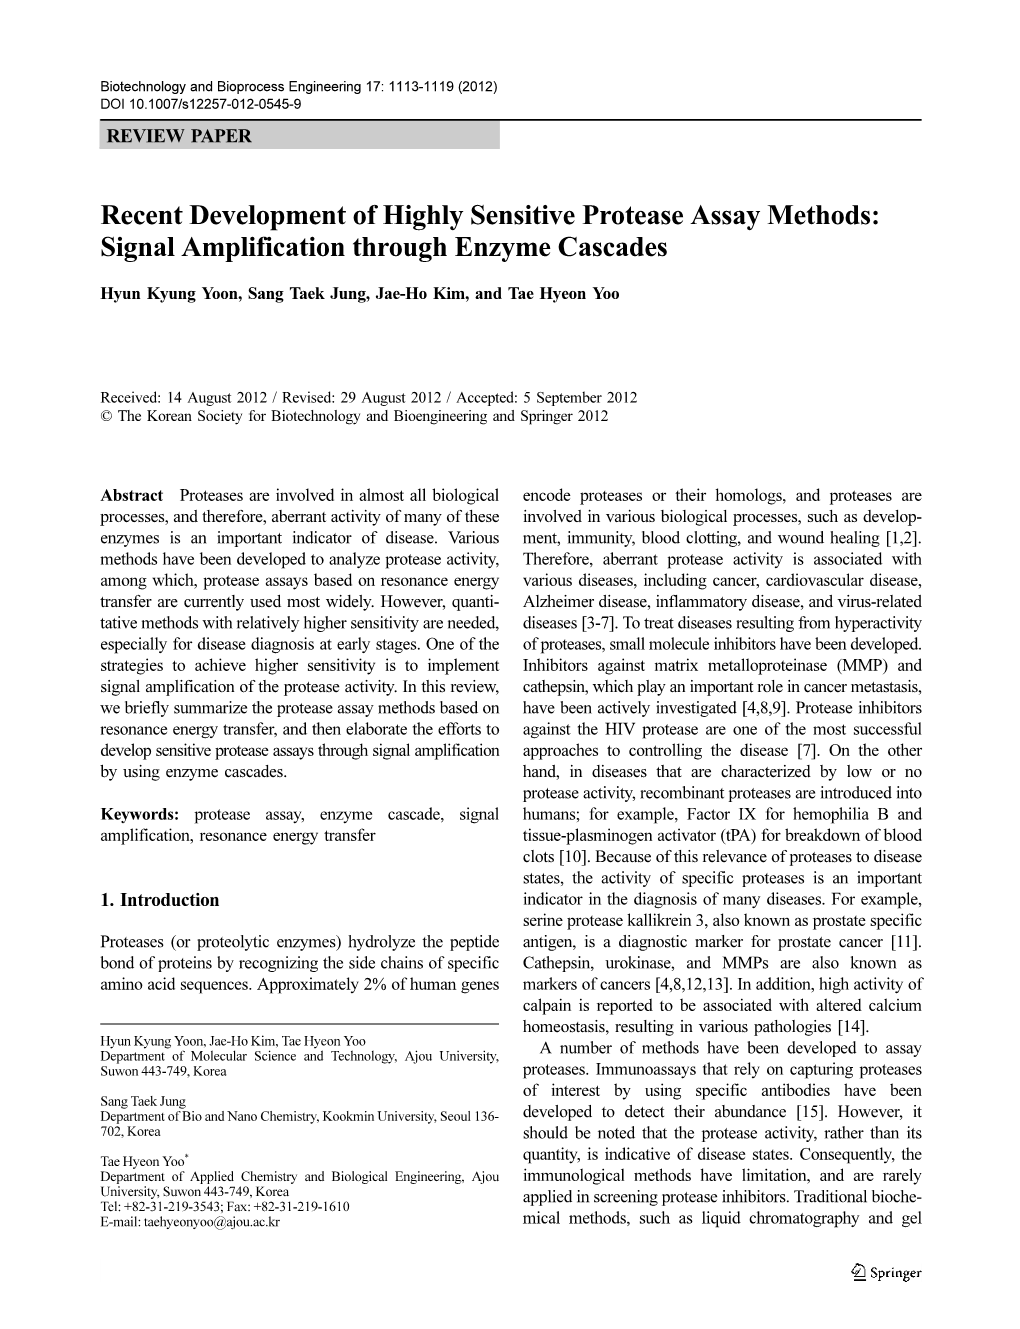 Recent Development of Highly Sensitive Protease Assay Methods: Signal Amplification Through Enzyme Cascades